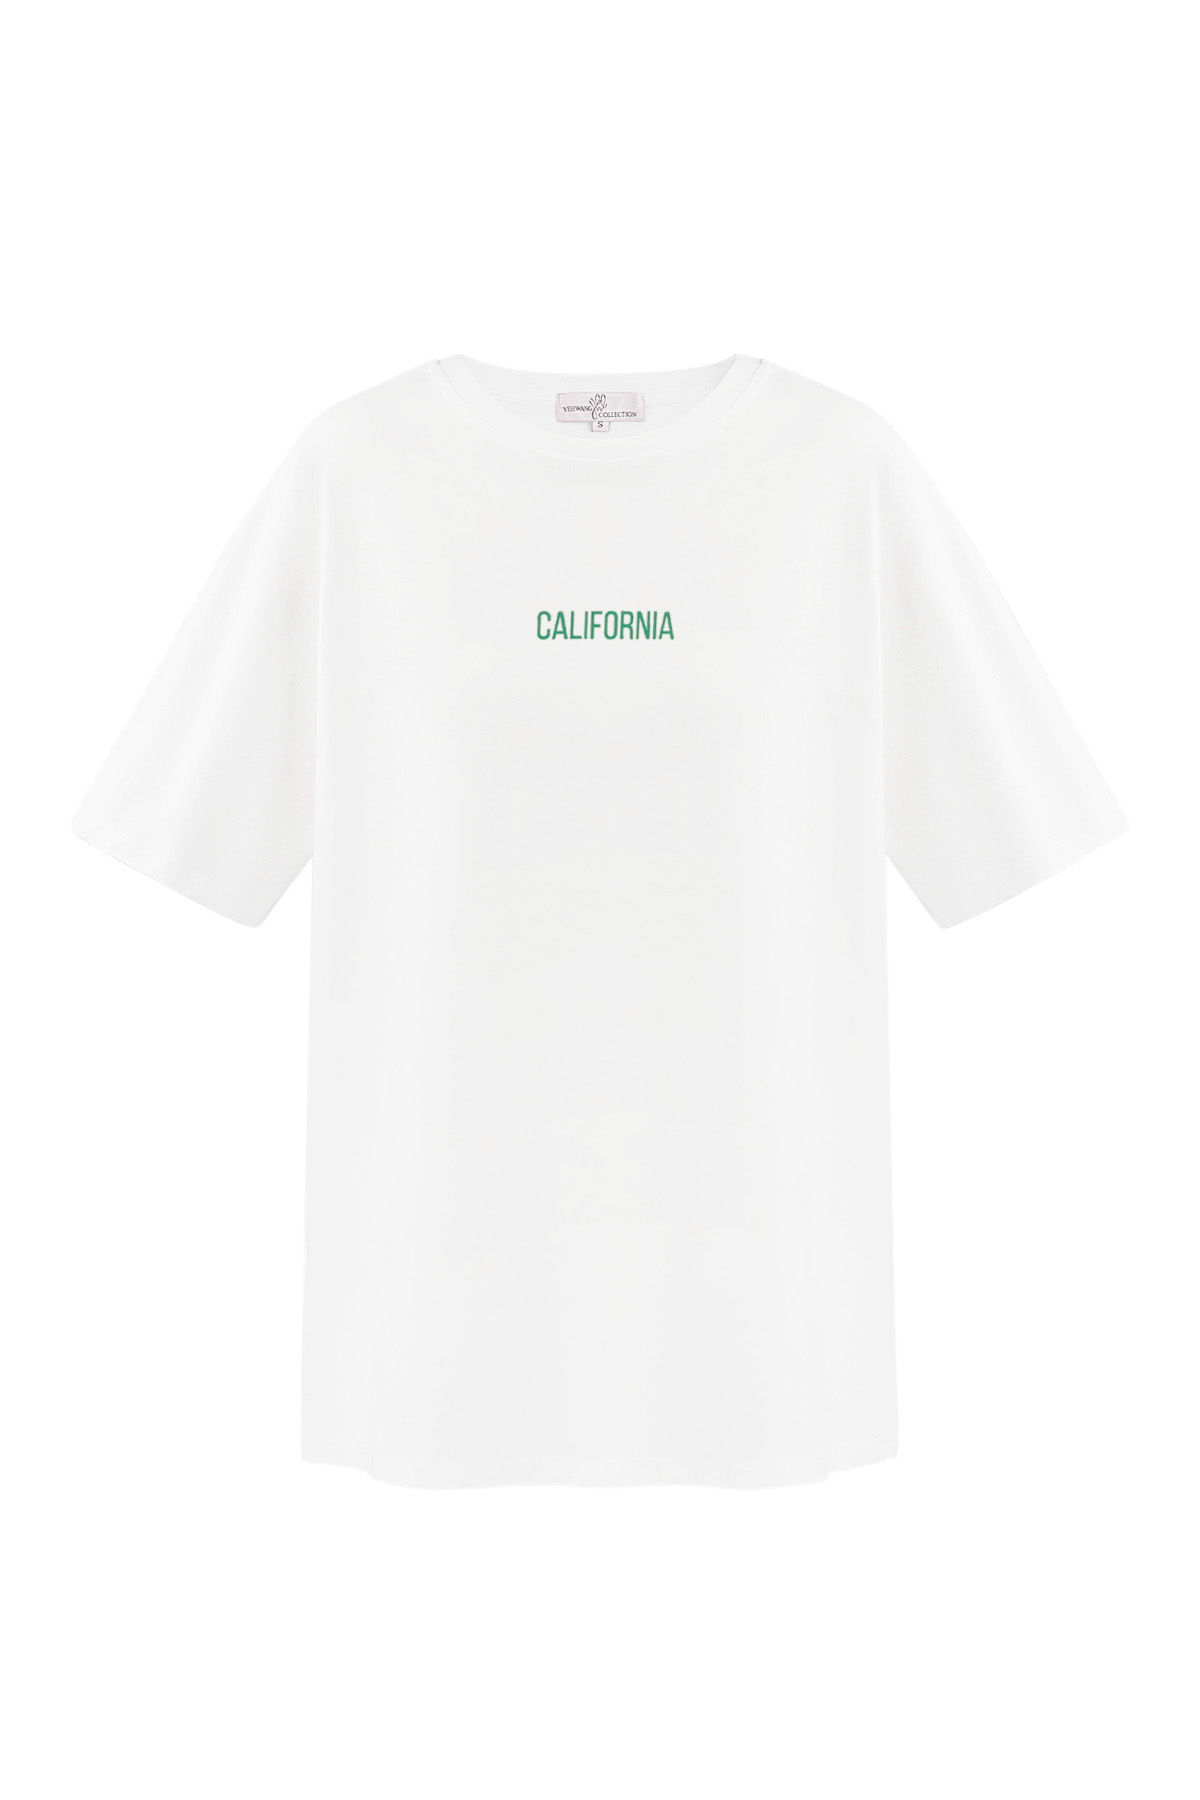 California T-shirt - white h5 